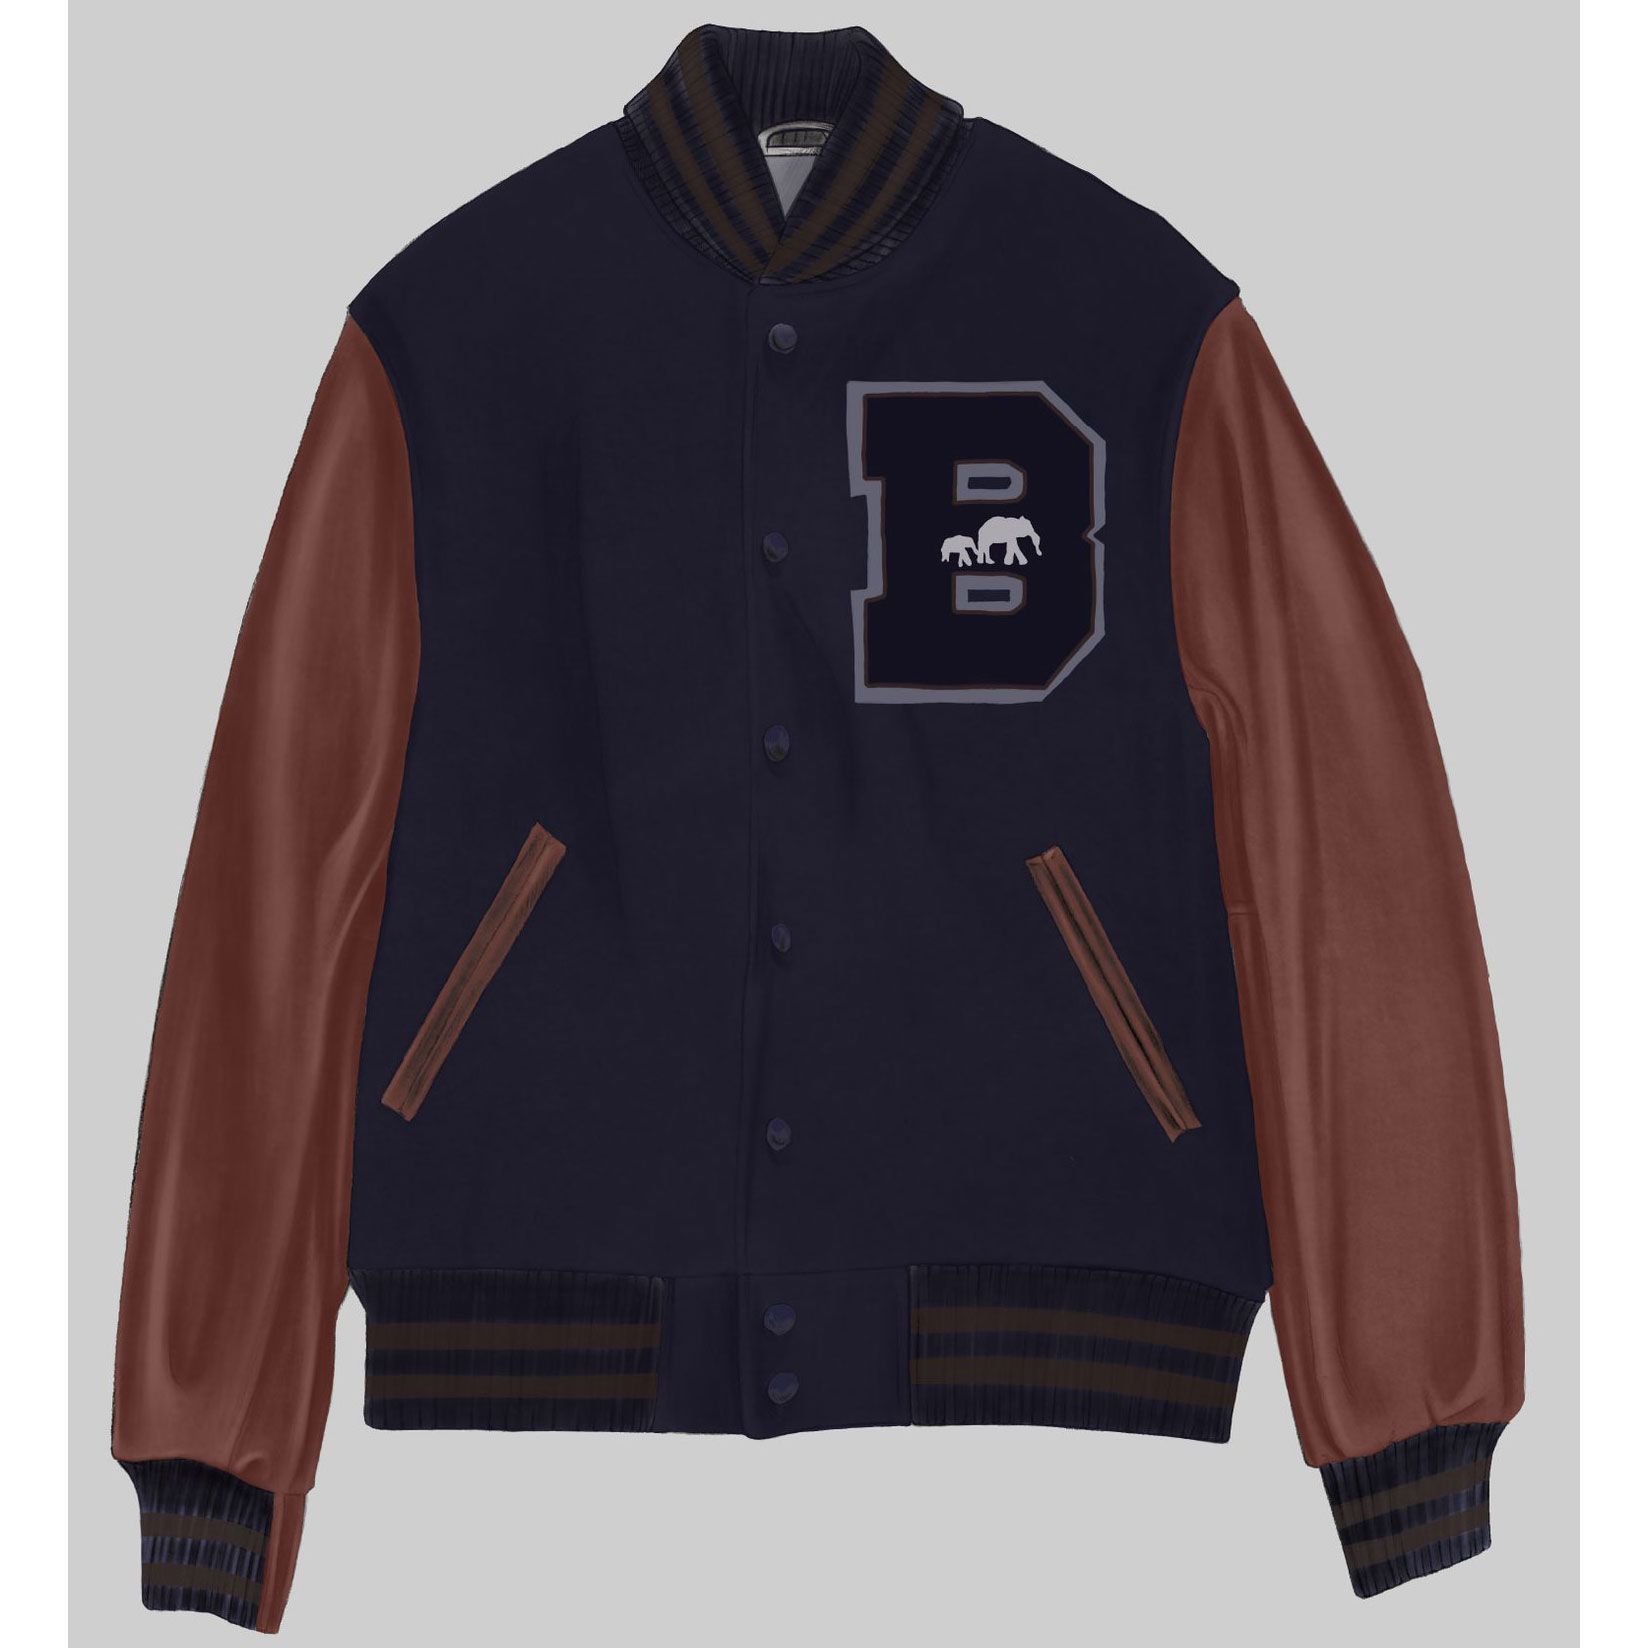 BKc Shelby Blues Varsity Jacket